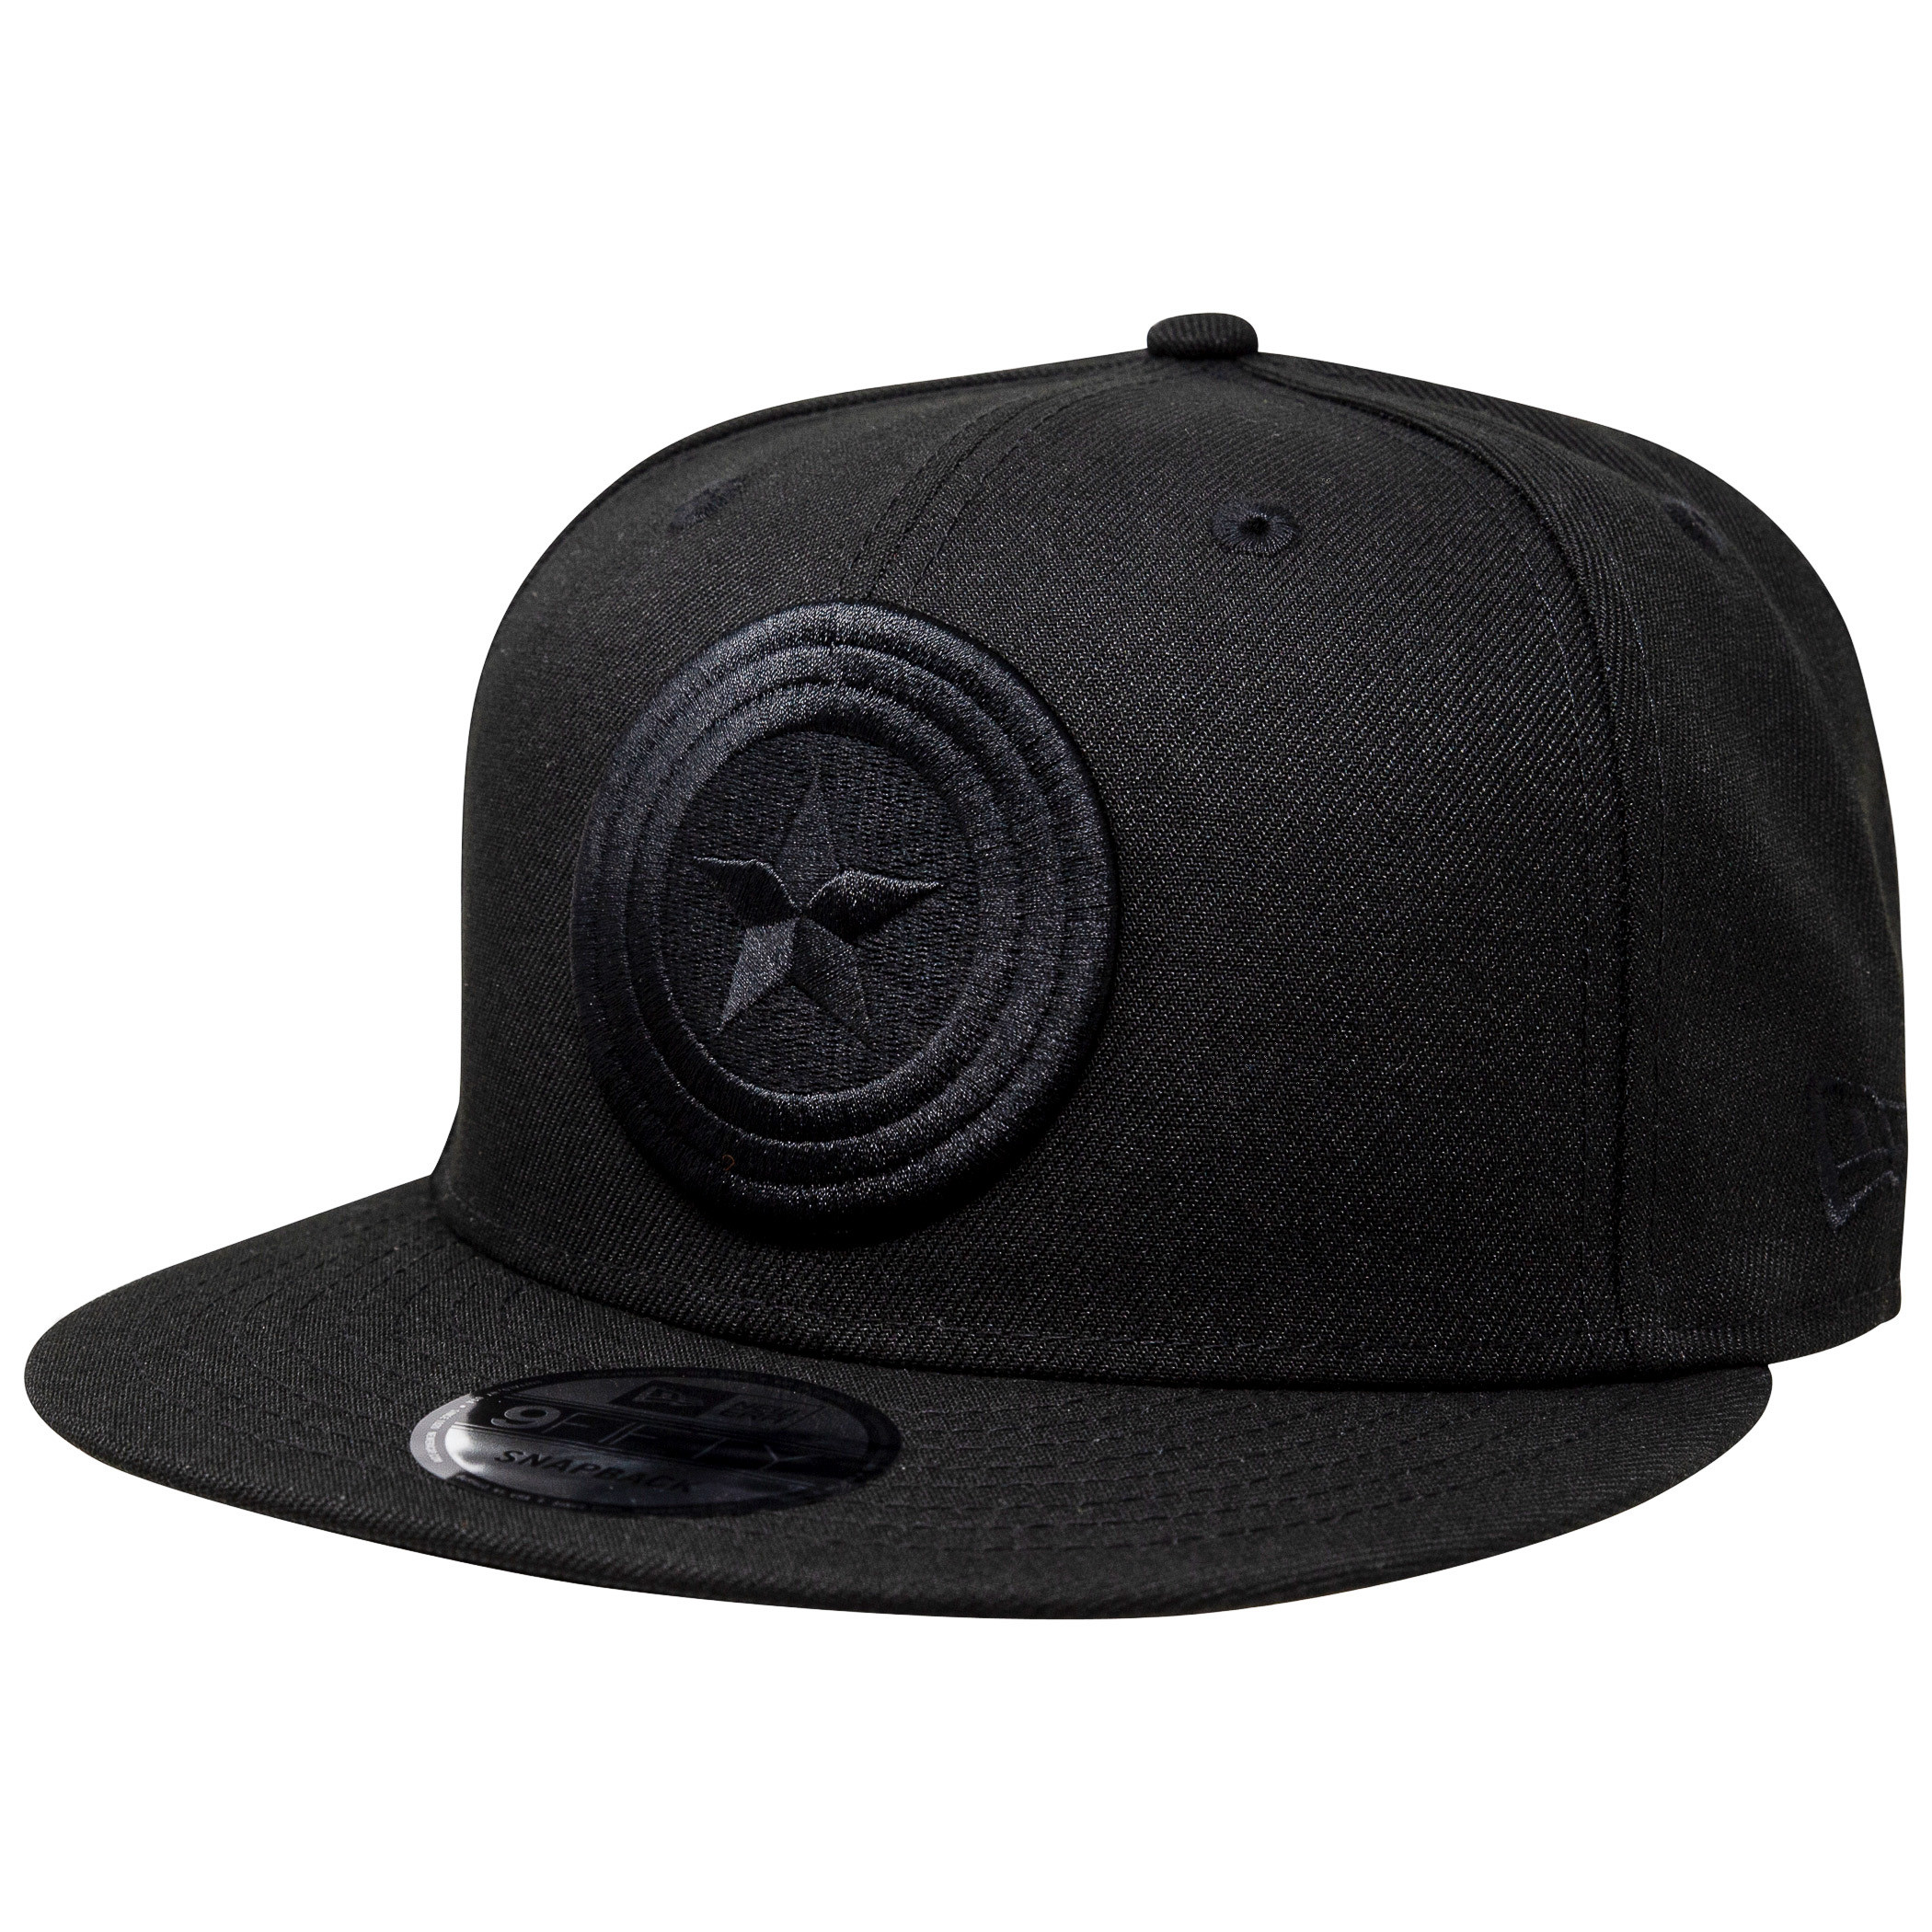 Captain America Black on Black New Era 9Fifty Adjustable Hat